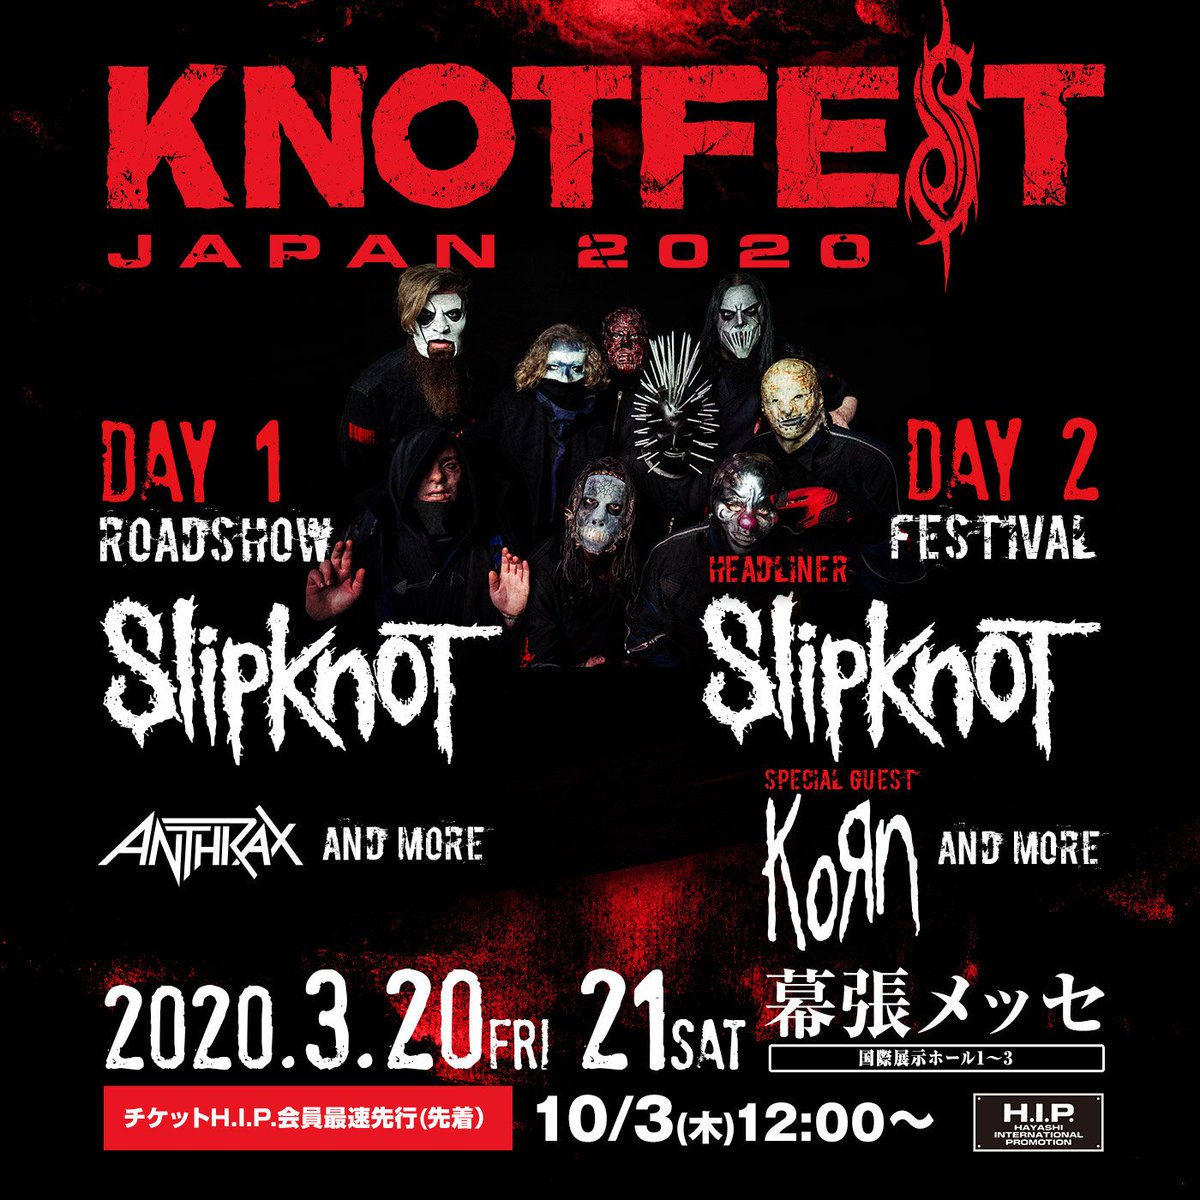 ☠️🔥【KNOTFEST JAPAN 2020遂に詳細発表】🔥☠️
両日ヘッドライナーSlipknotに加え、
KOЯN, ANTHRAXの２バンドが決定❗️

H.I.P.会員最速先行10/3(木)12時スタート❗️
チケット詳細➡️knotfestjapan.com

#knotfestjapan #ノットフェス #slipknot
#knotfestroadshow #WeAreNotYourKind